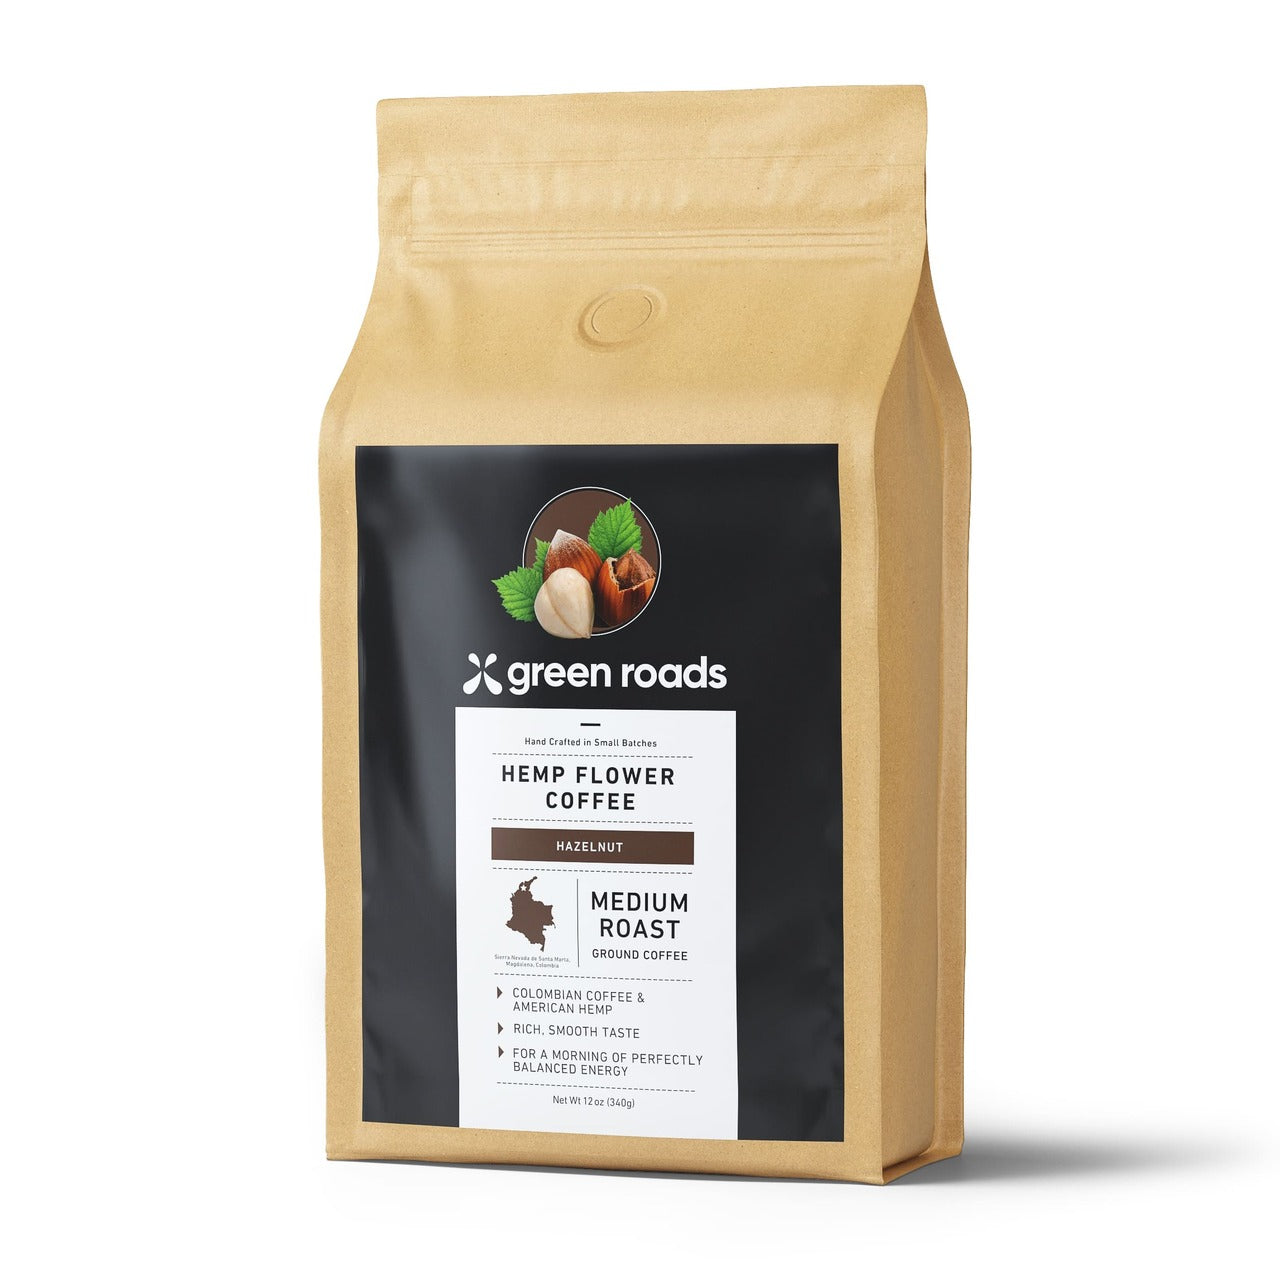 Hemp CBD Coffee - Medium Roast Hazelnut Hemp Flower Coffee 12 oz bag